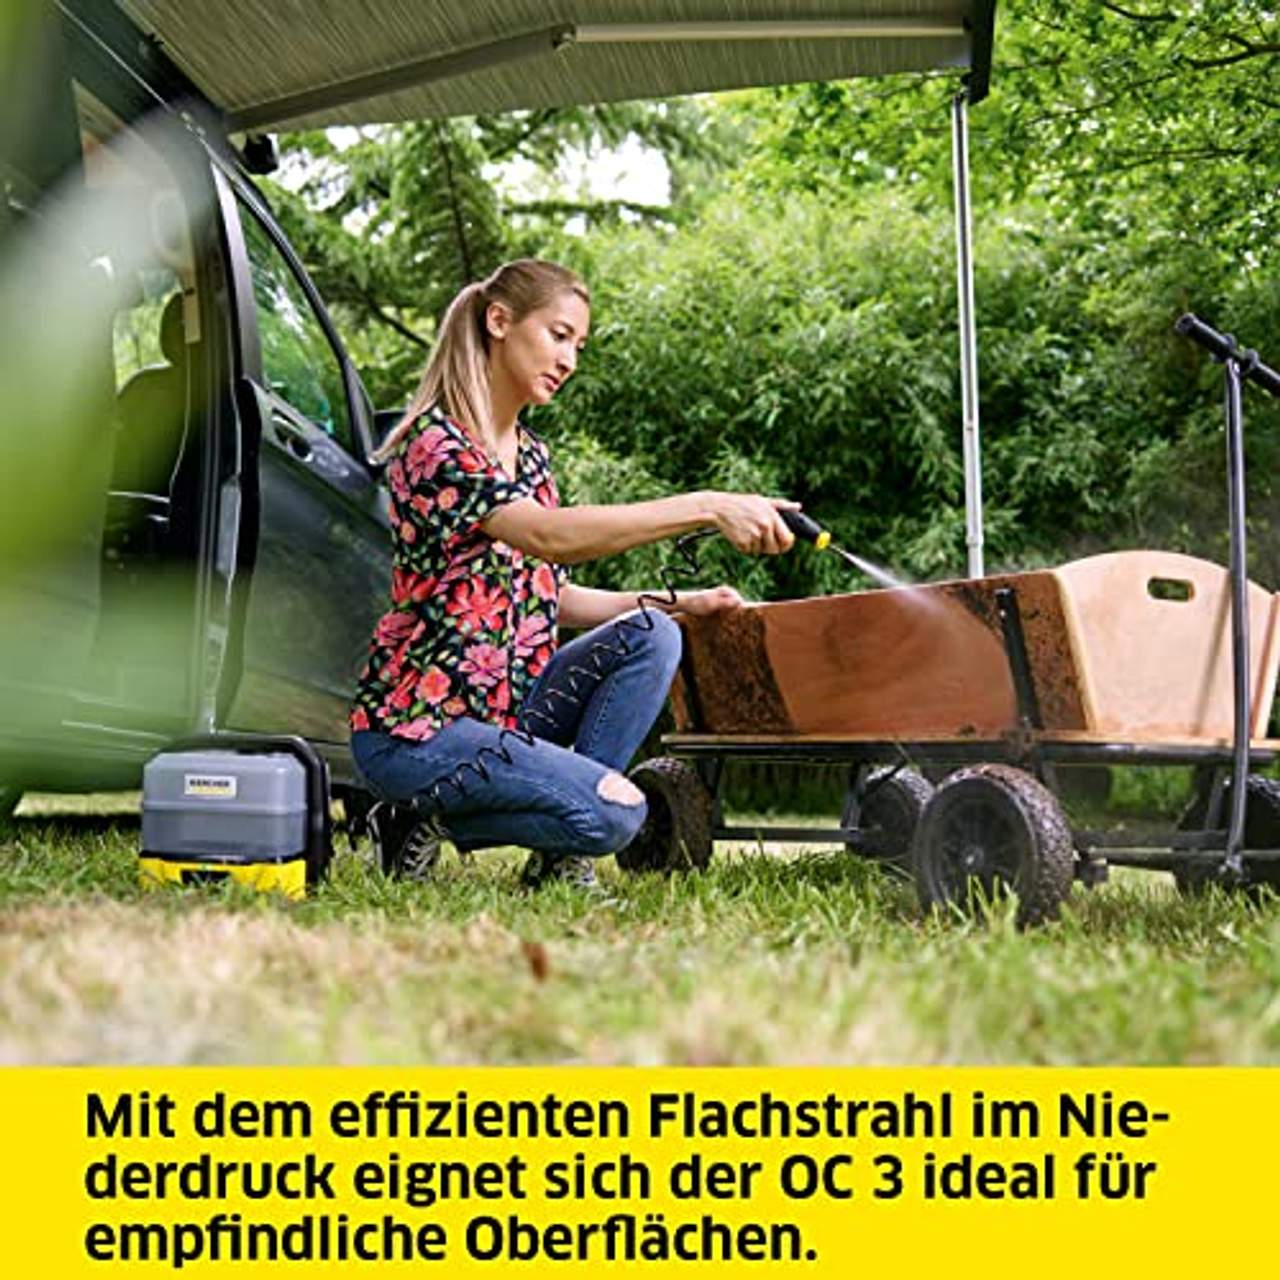 Kärcher Mobile Outdoor Cleaner OC 3 Plus Car